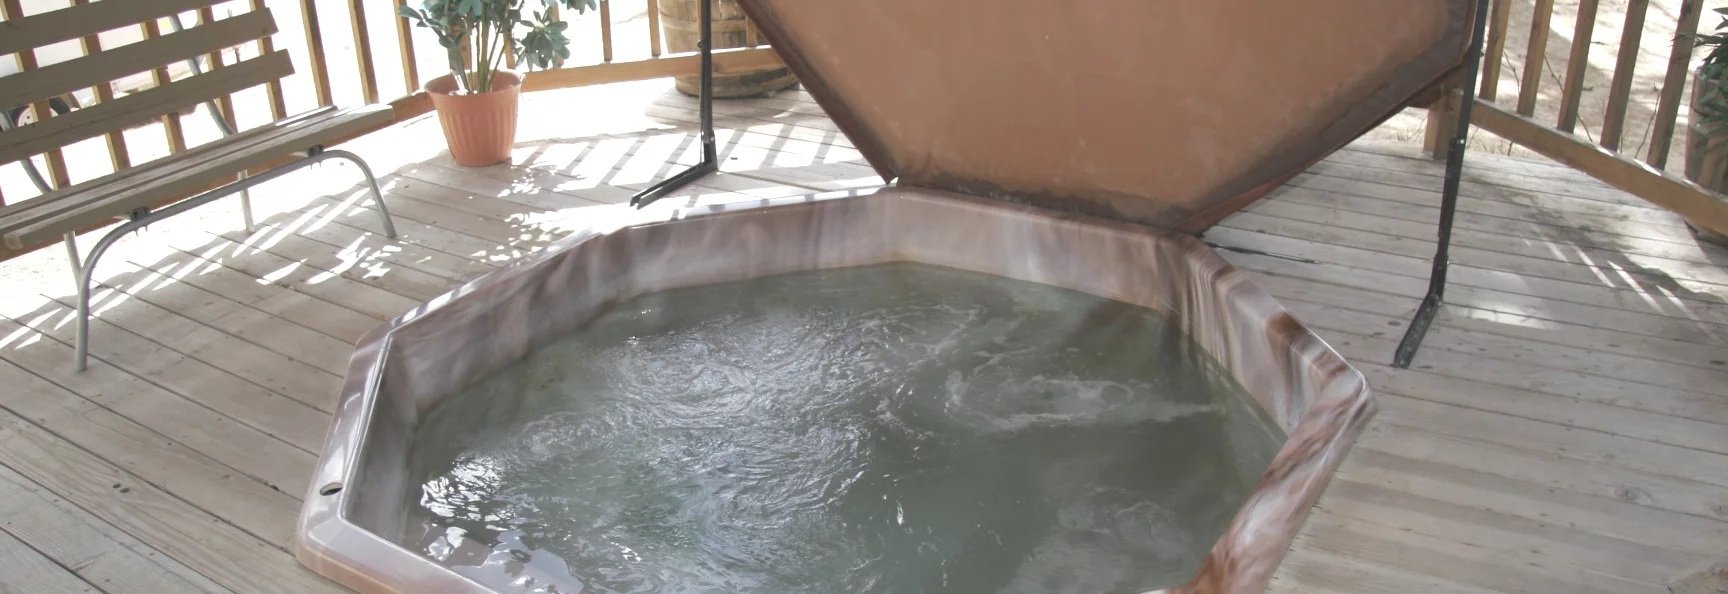 Village Lodge hot tub